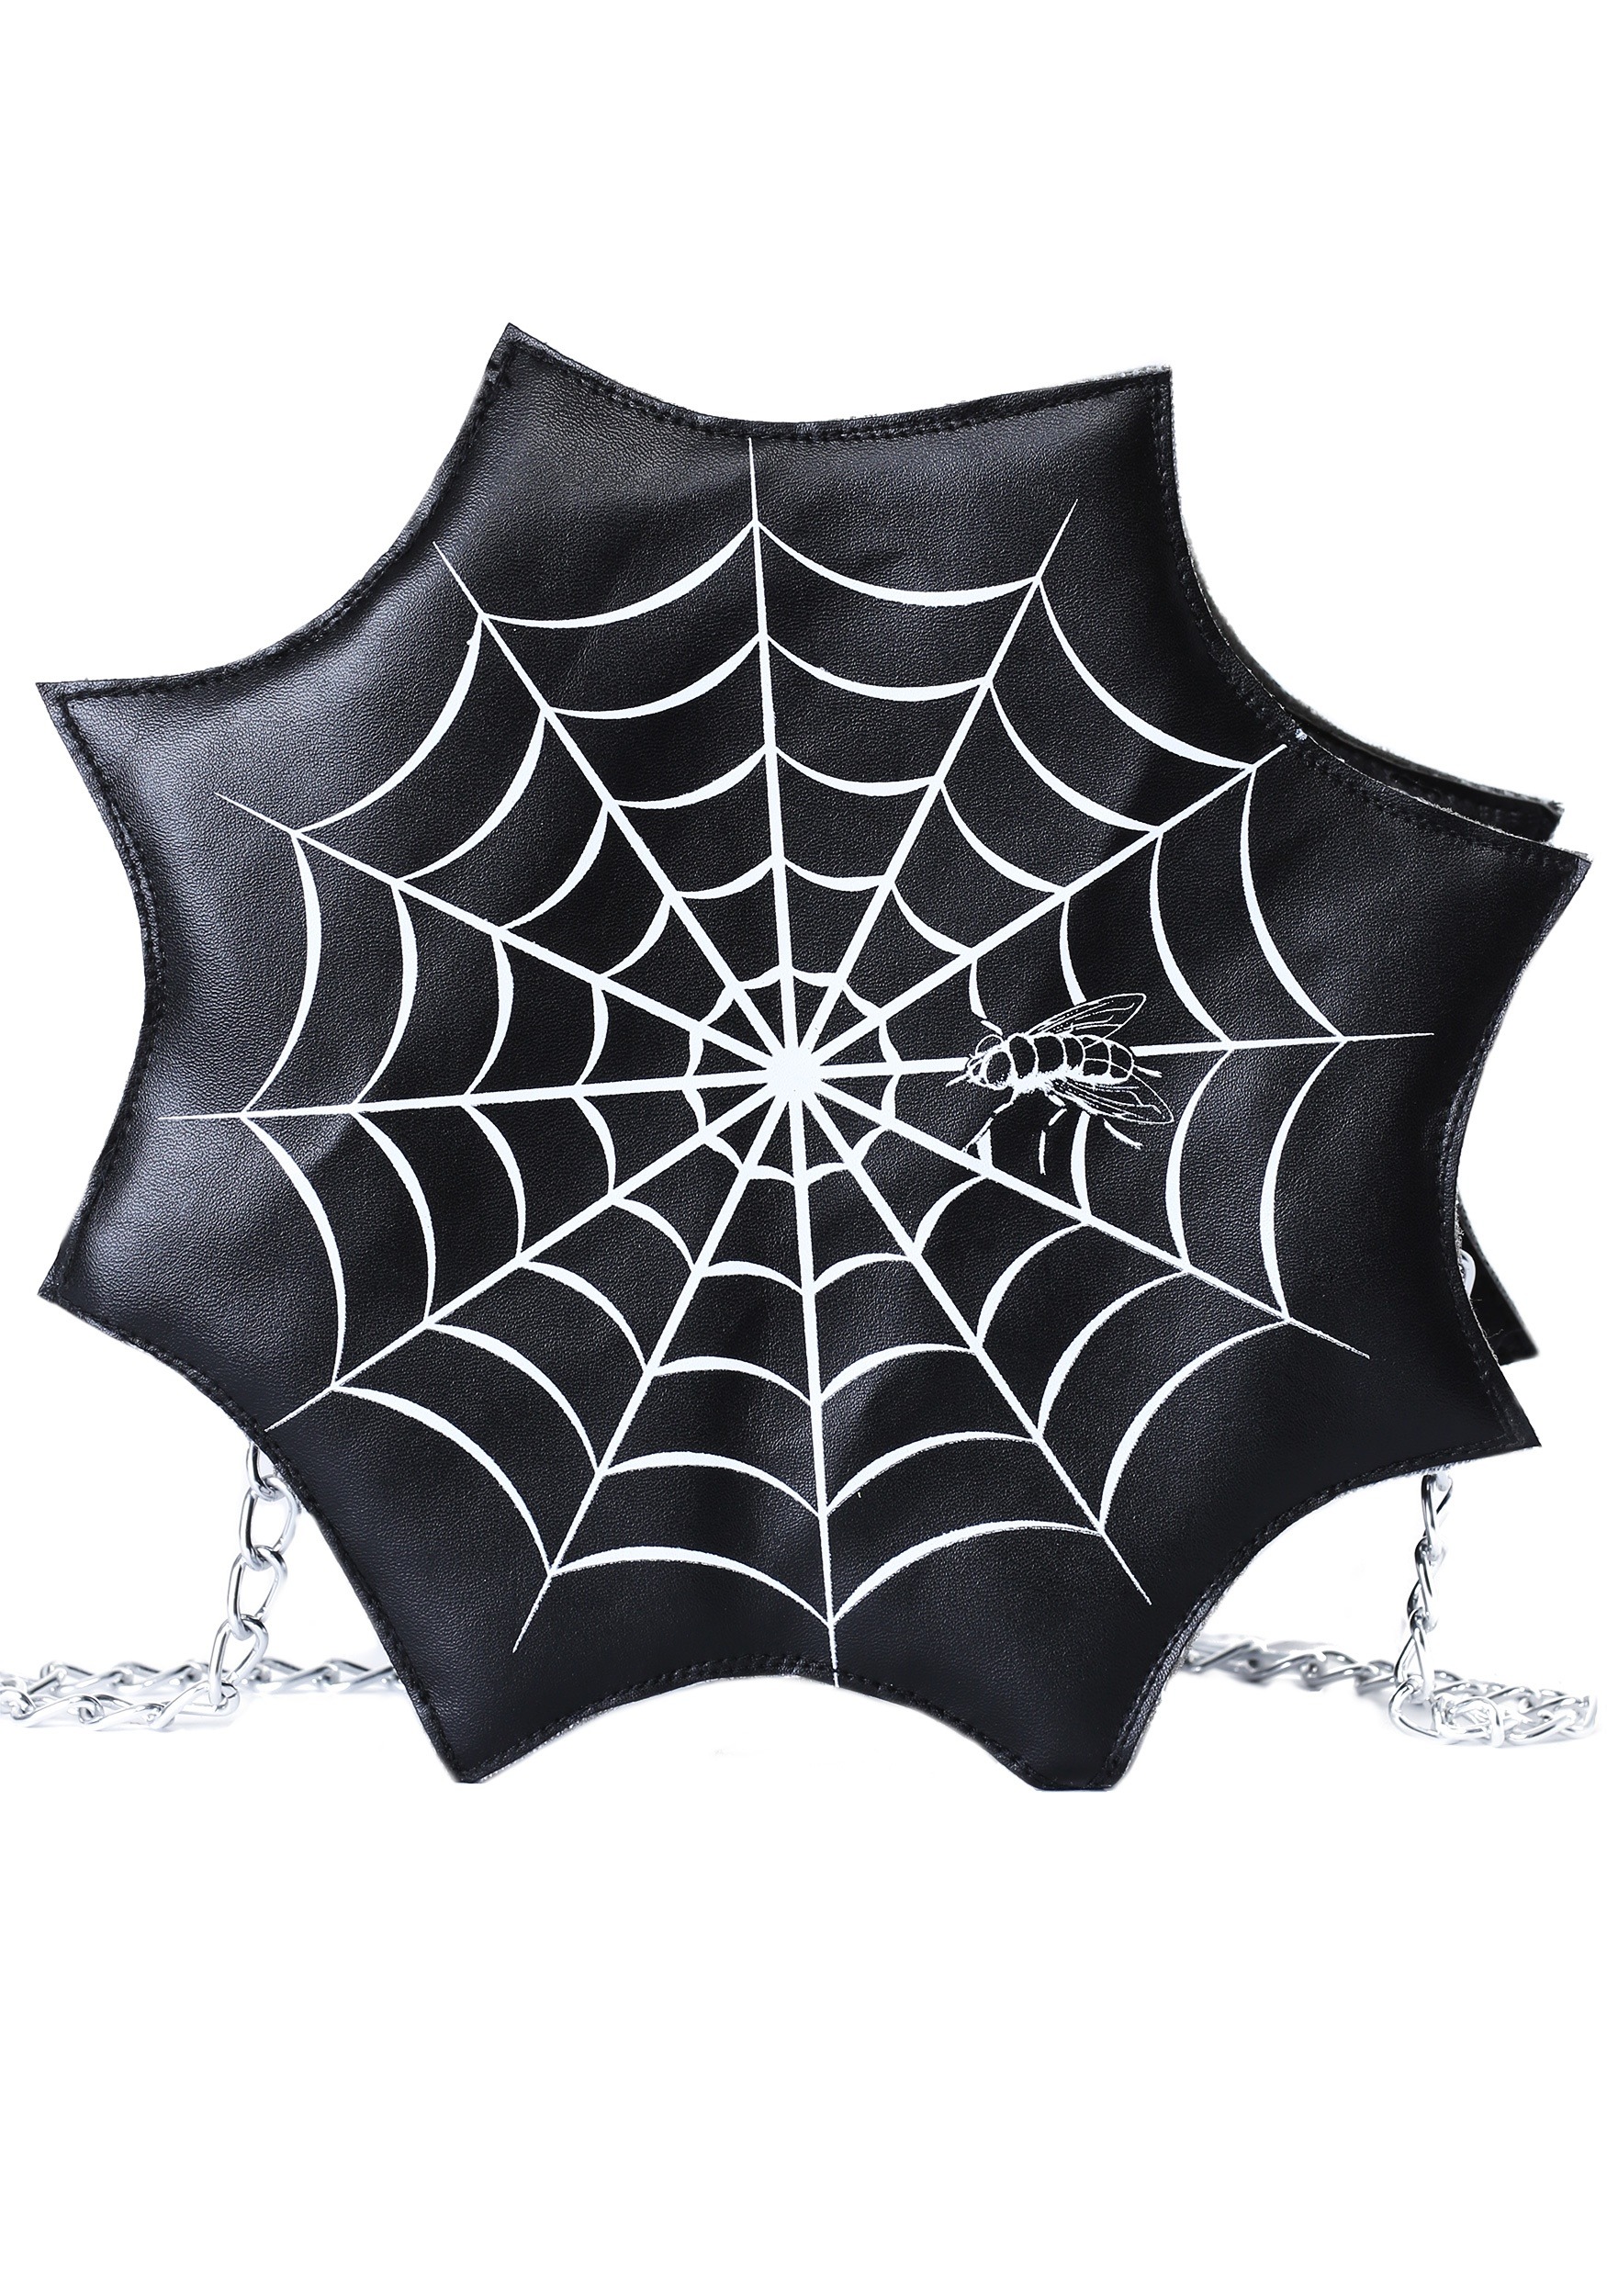 Spider Web Womens Purse